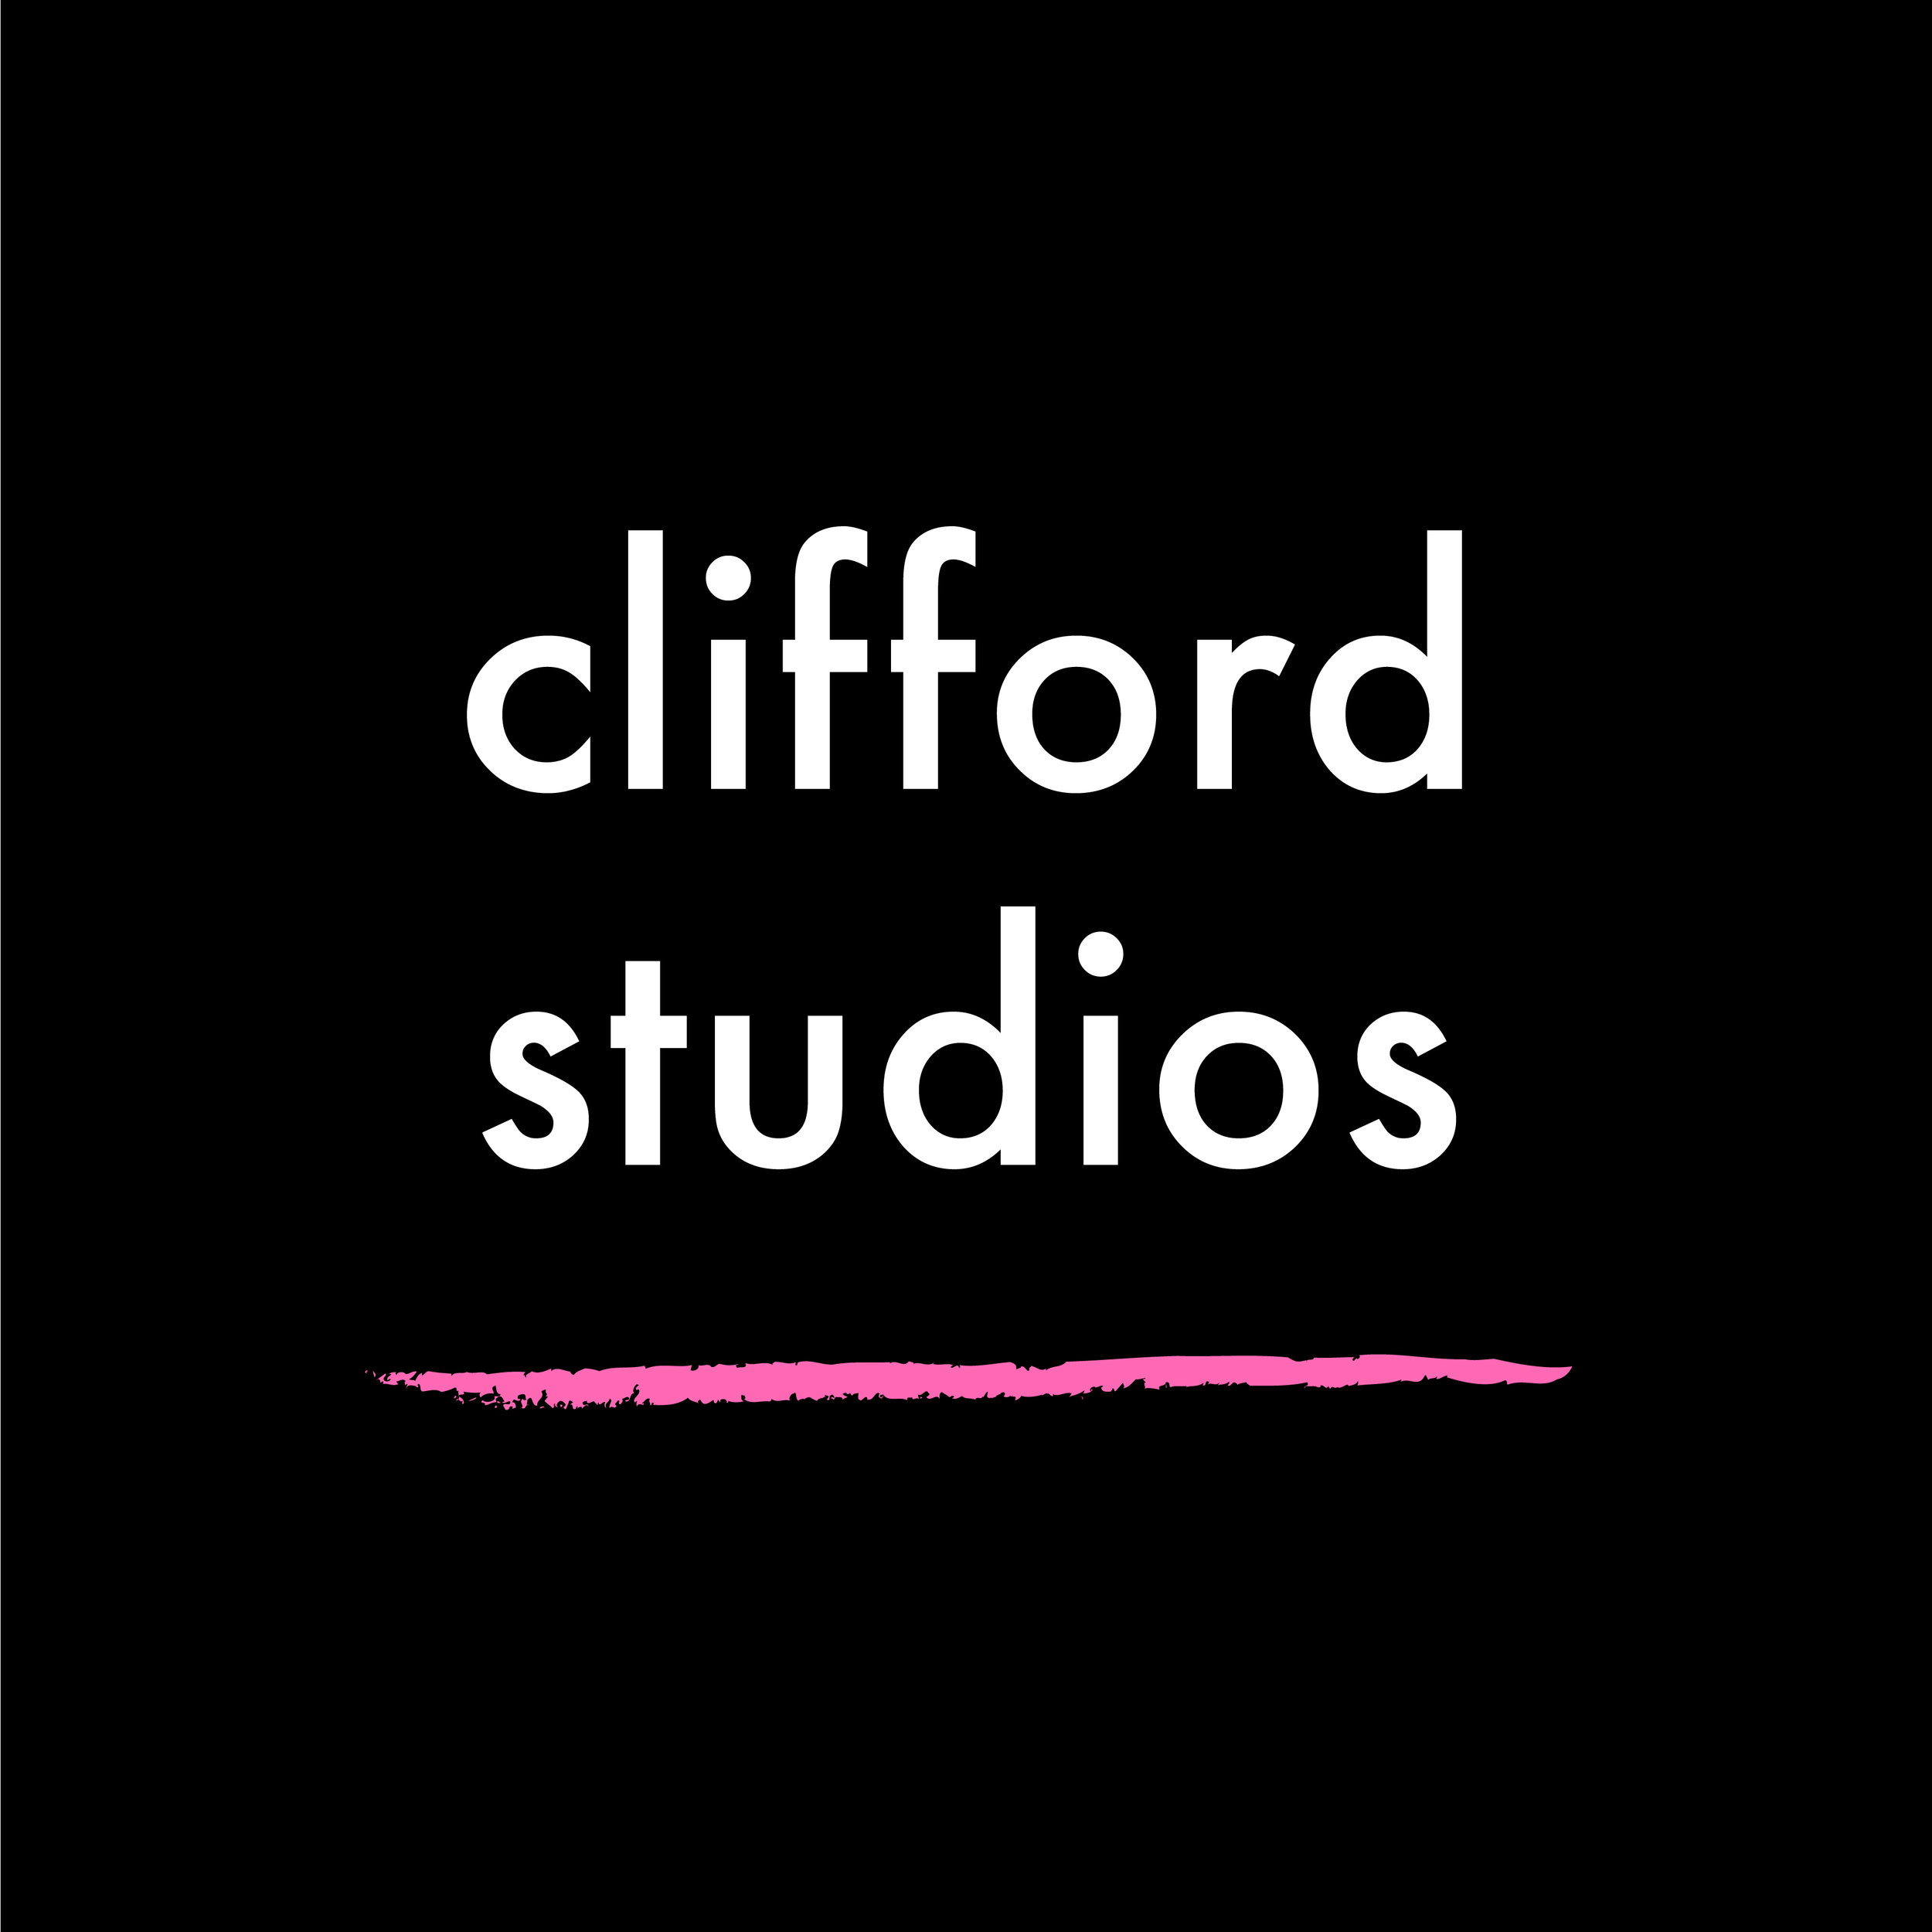 Clifford Studios logo square 30x30cm-01.jpg